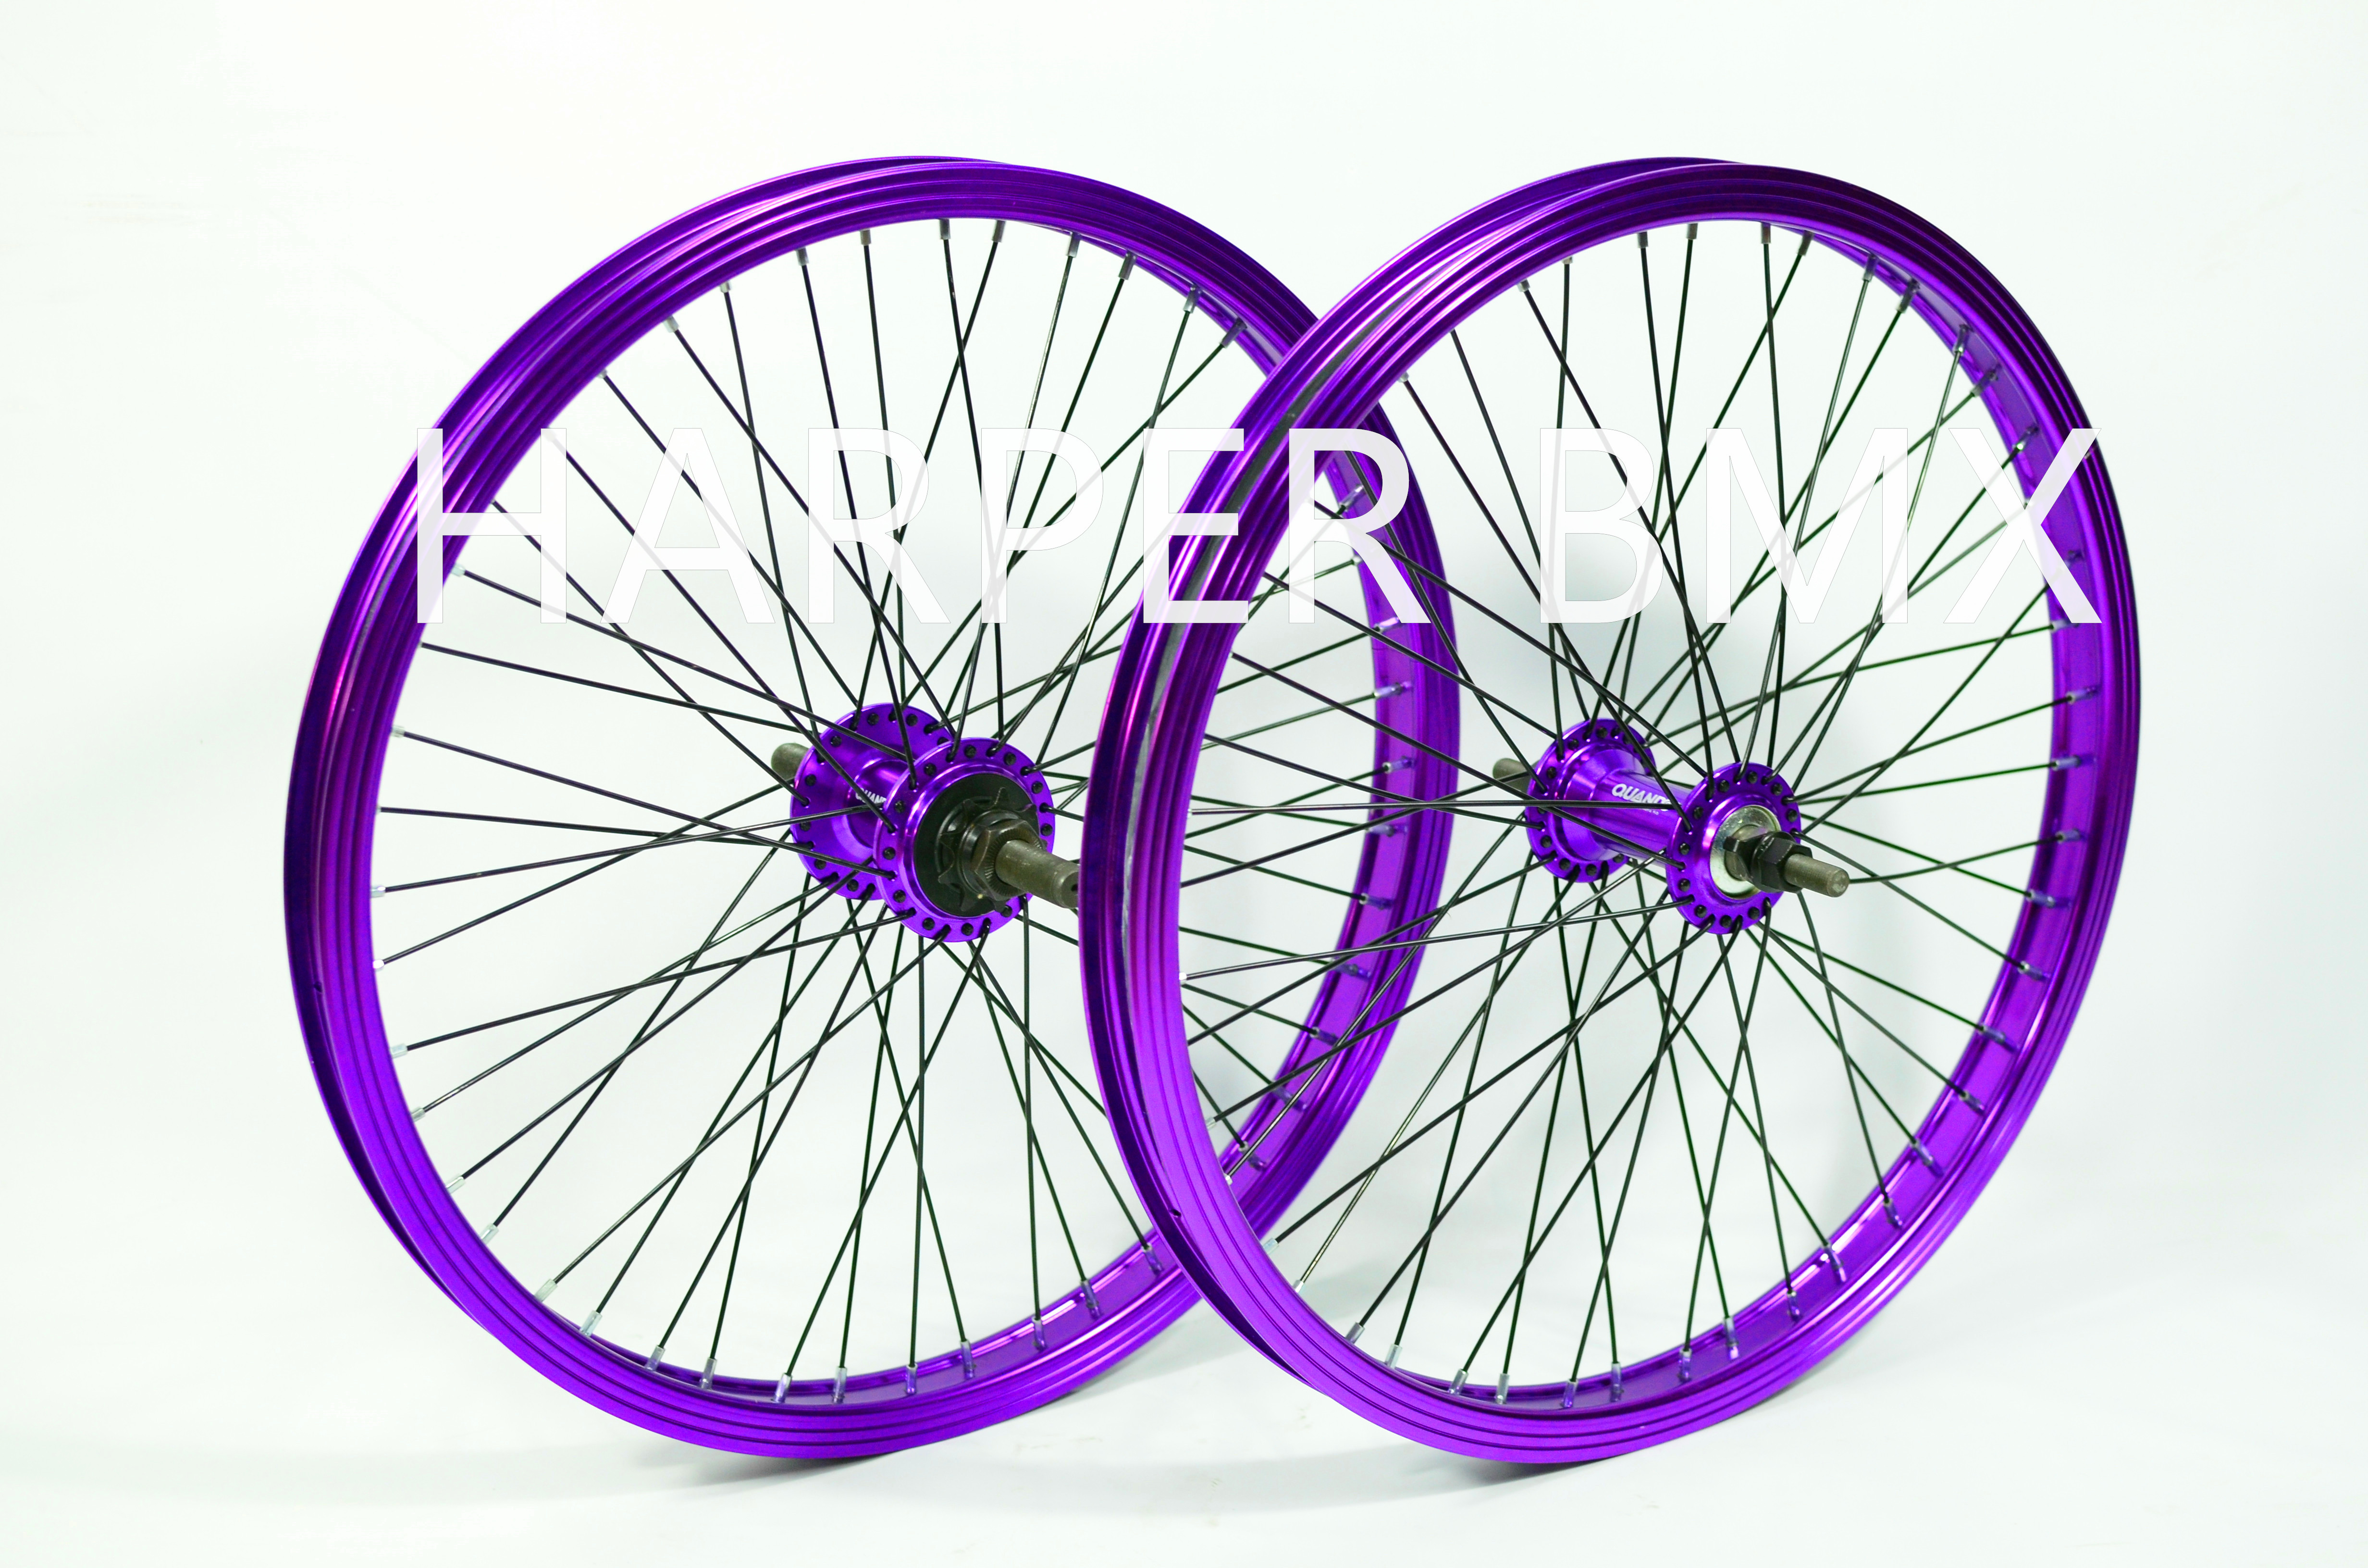 bmx bike wheels 20 inch